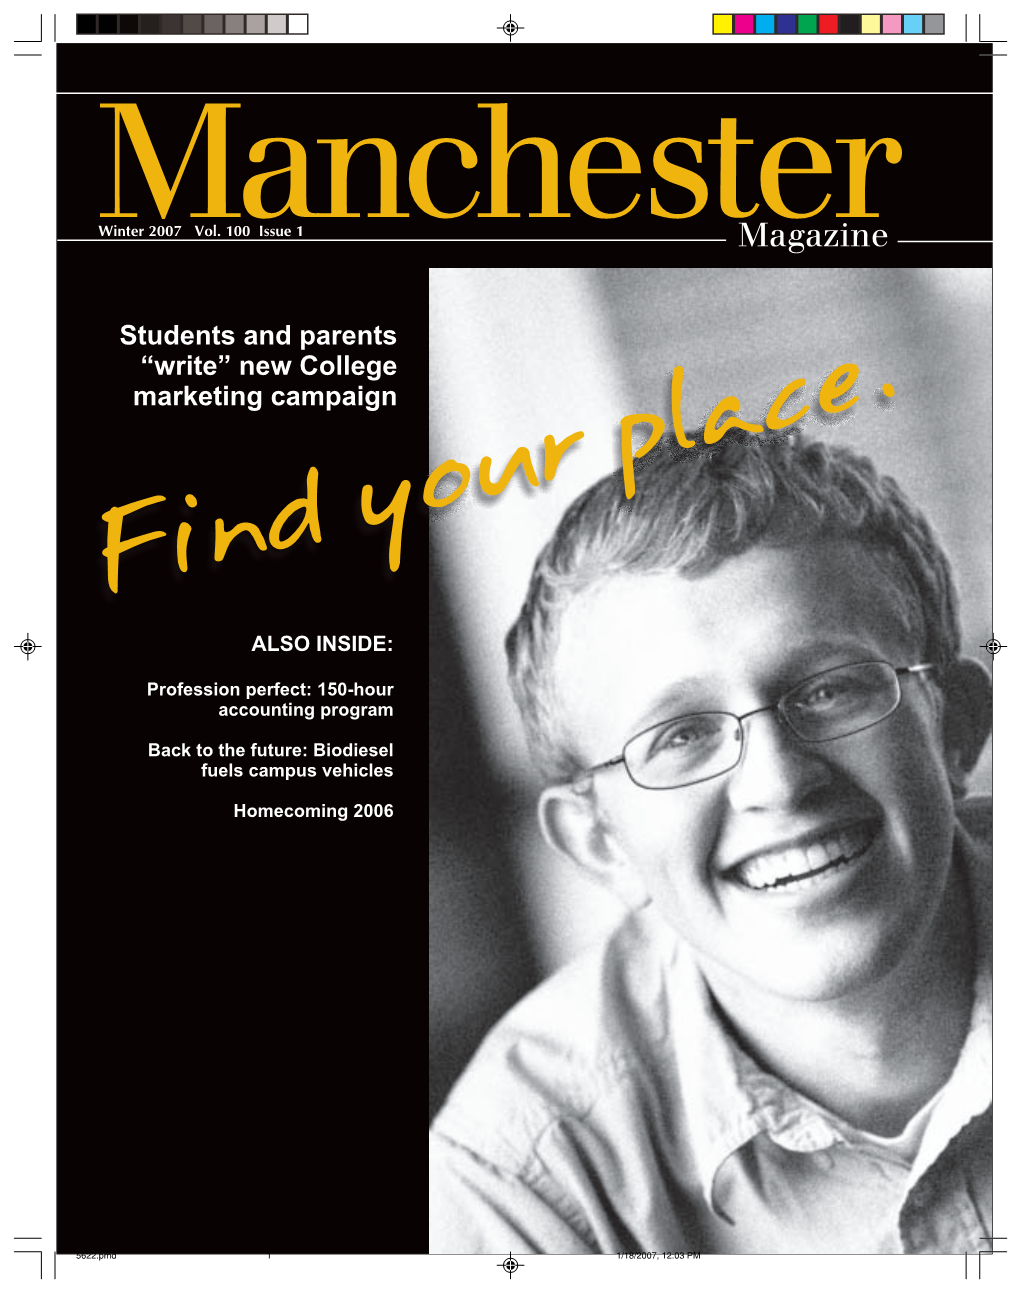 Manchester Magazine 1